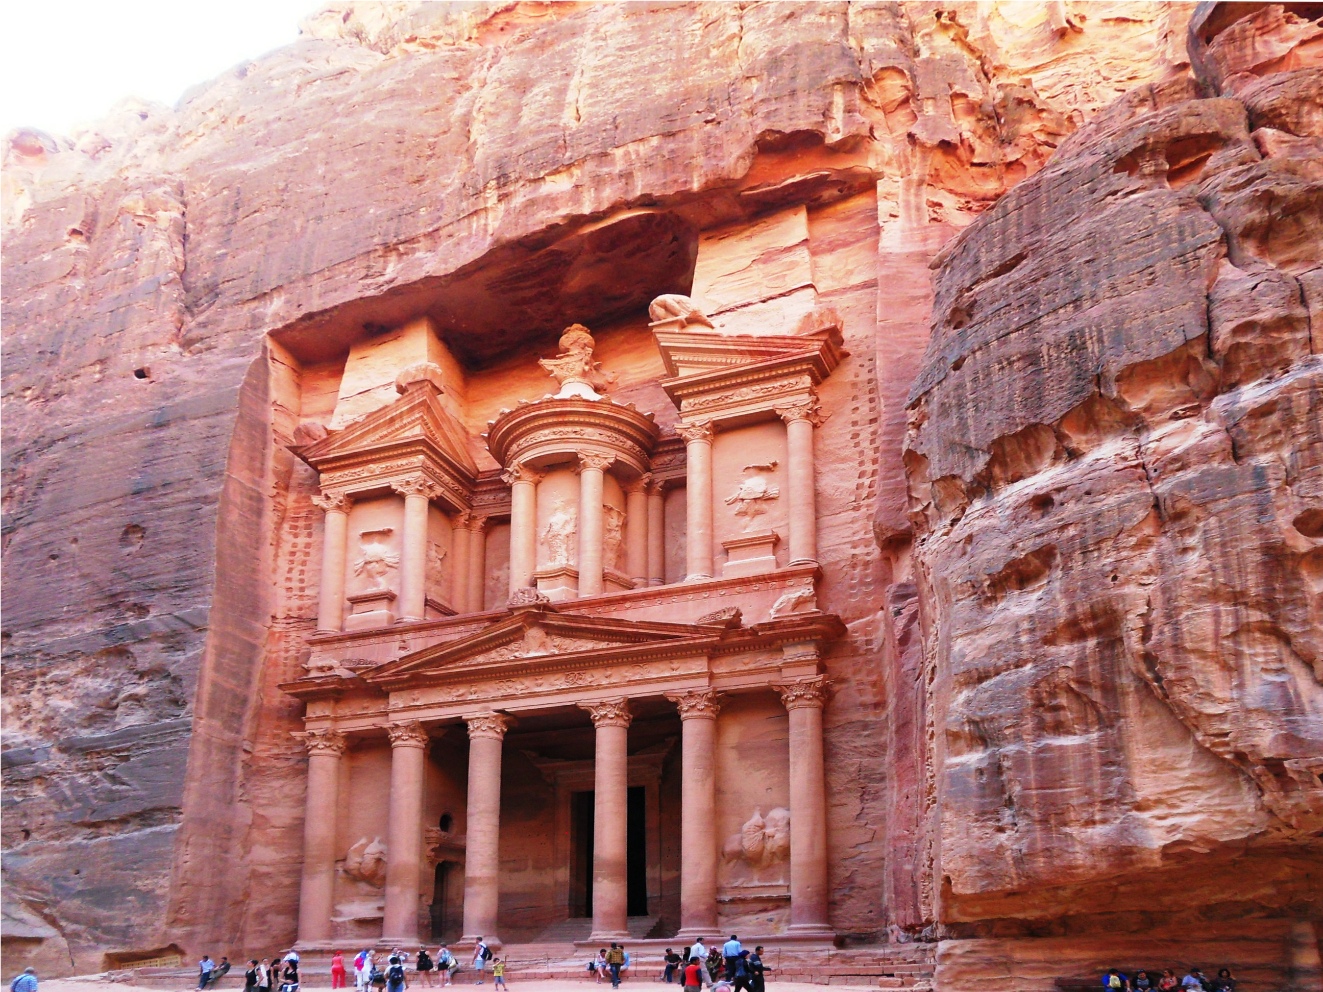 famous sites in jordan